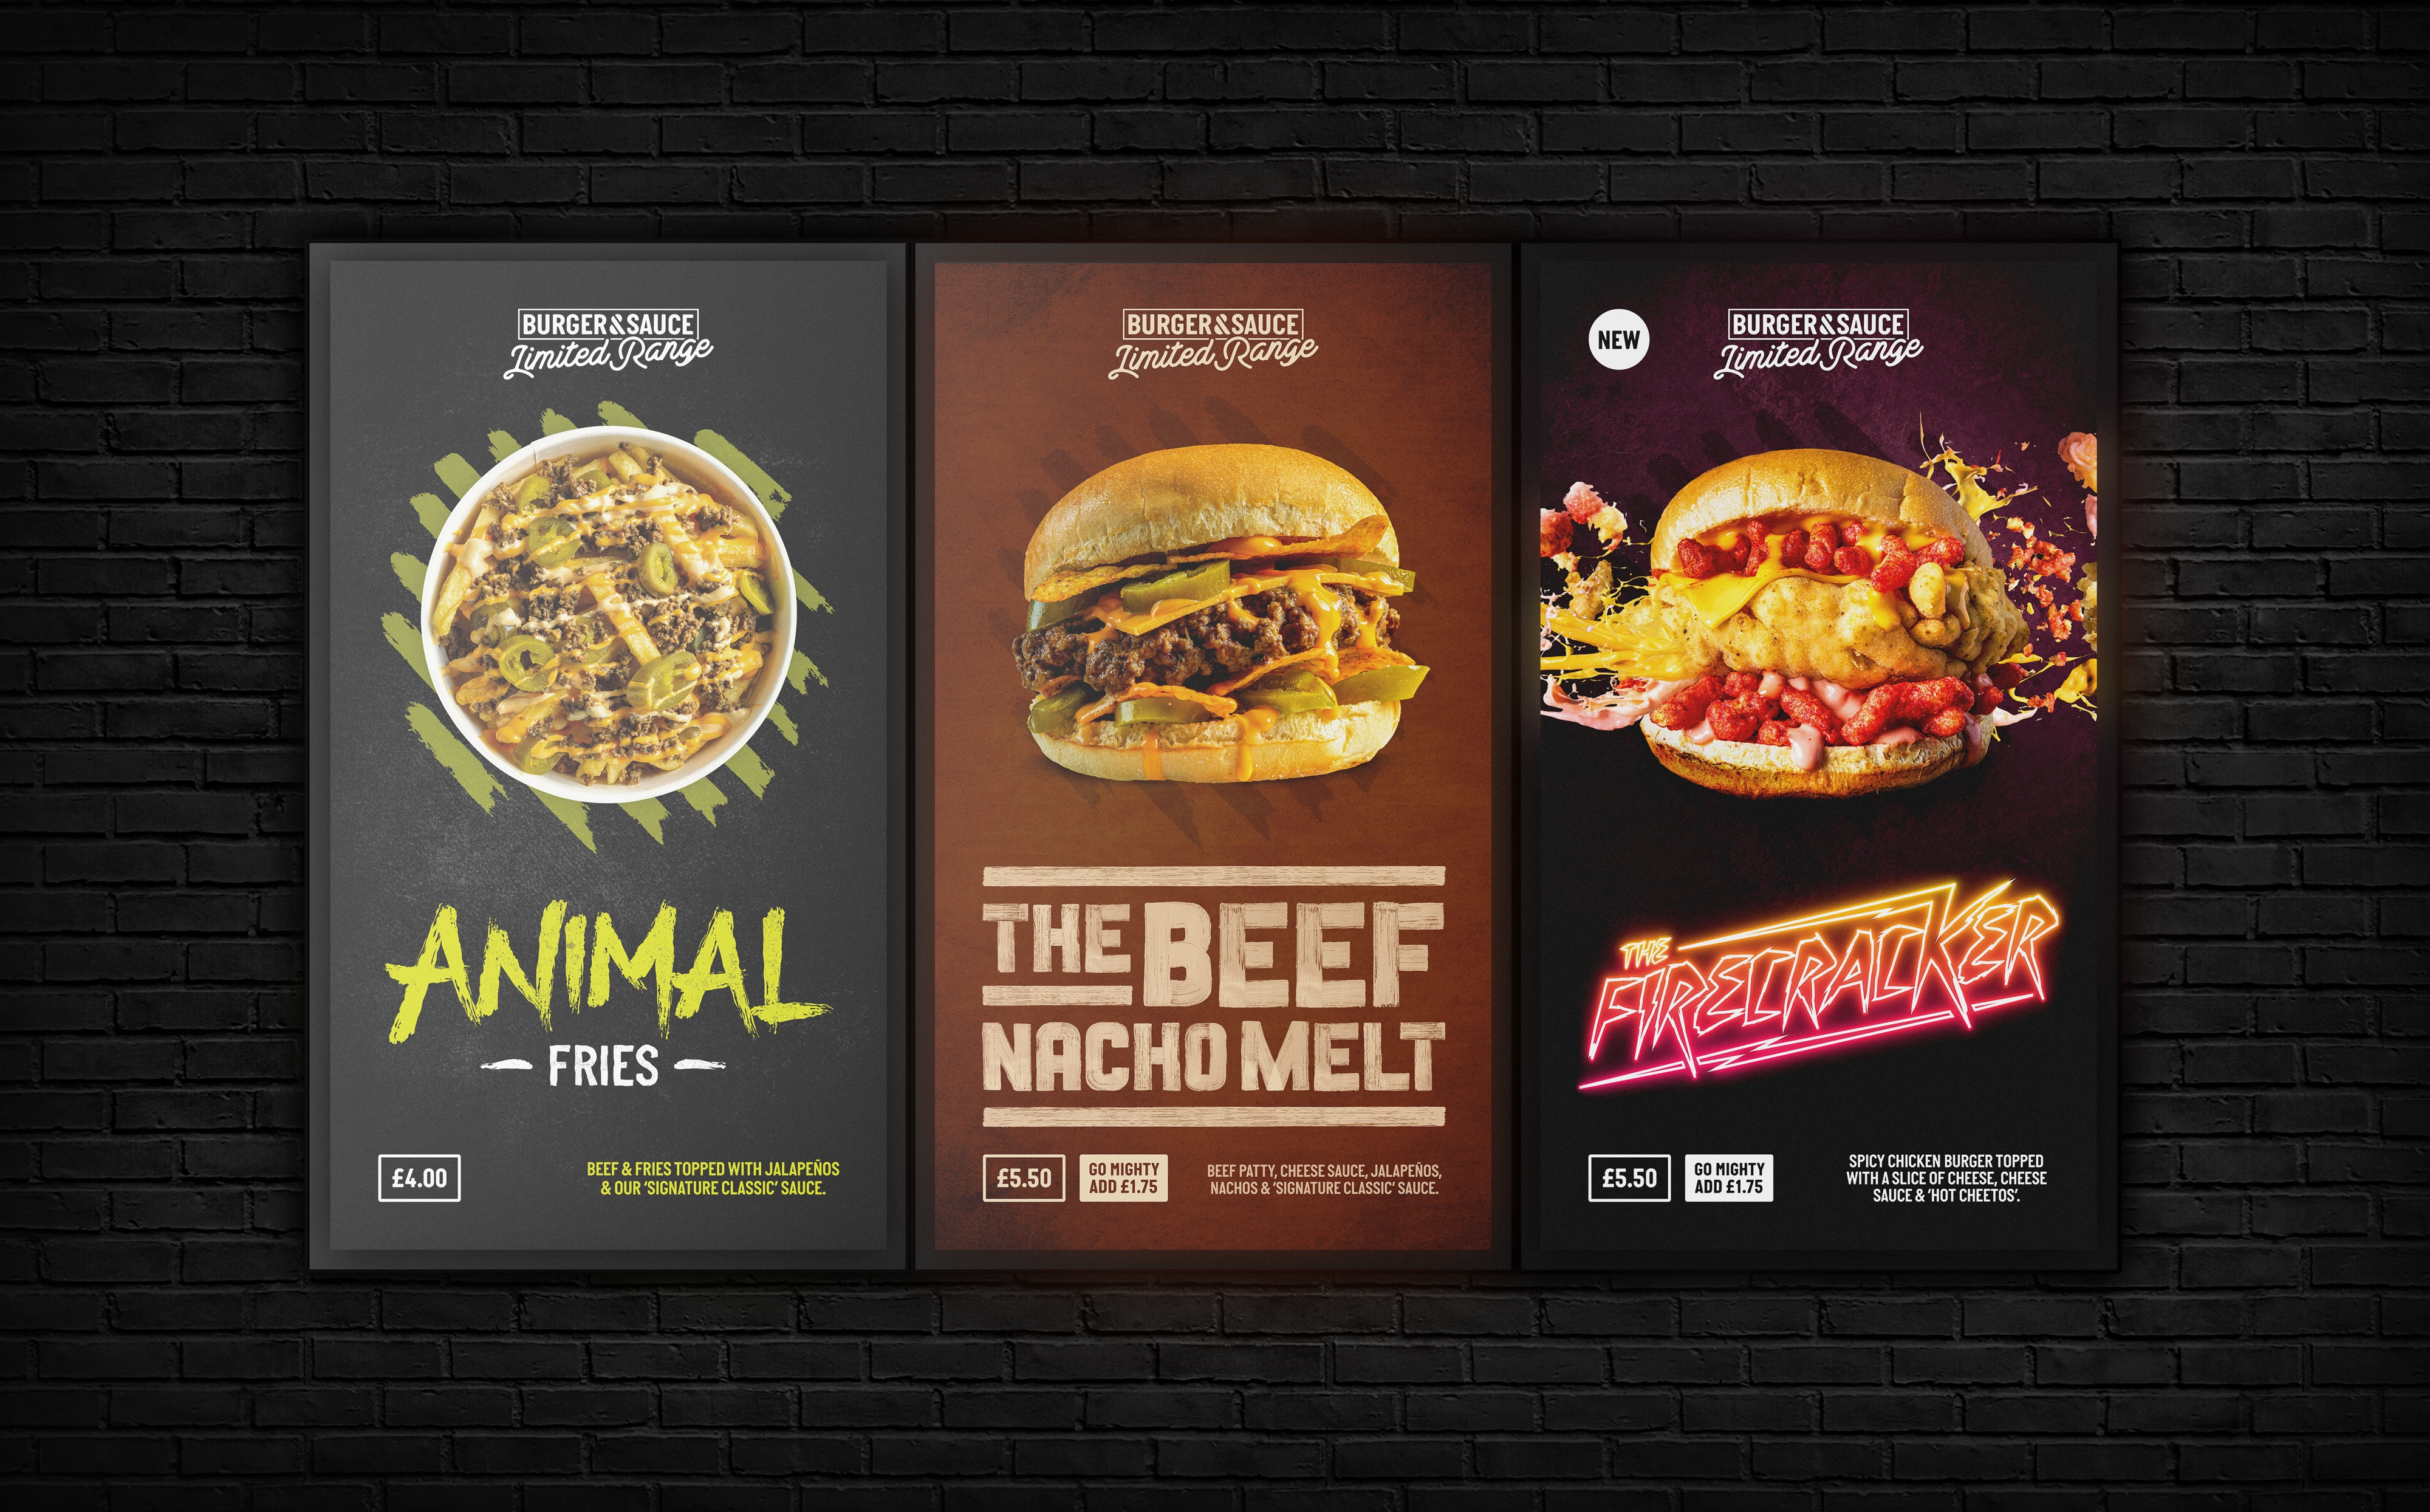 Burger & Sauce Digital Menus Beef Nacho Burger, Animal Fries, Firecracker